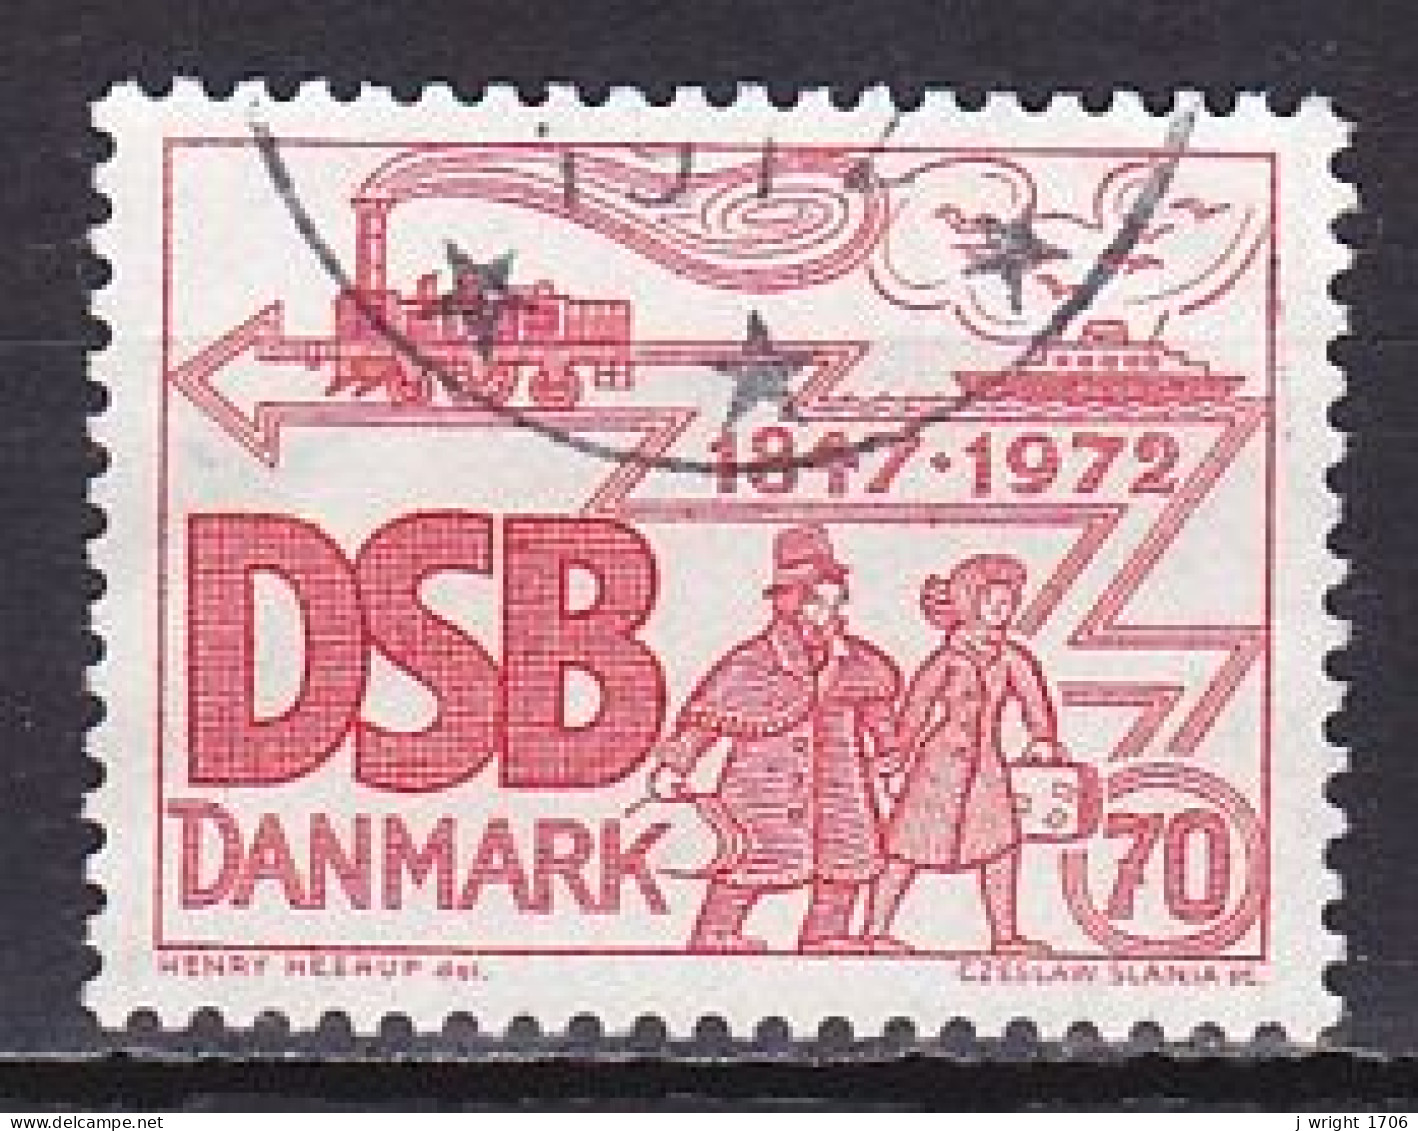 Denmark, 1972, Danish State Railways 125th Anniv, 70ø, USED - Oblitérés